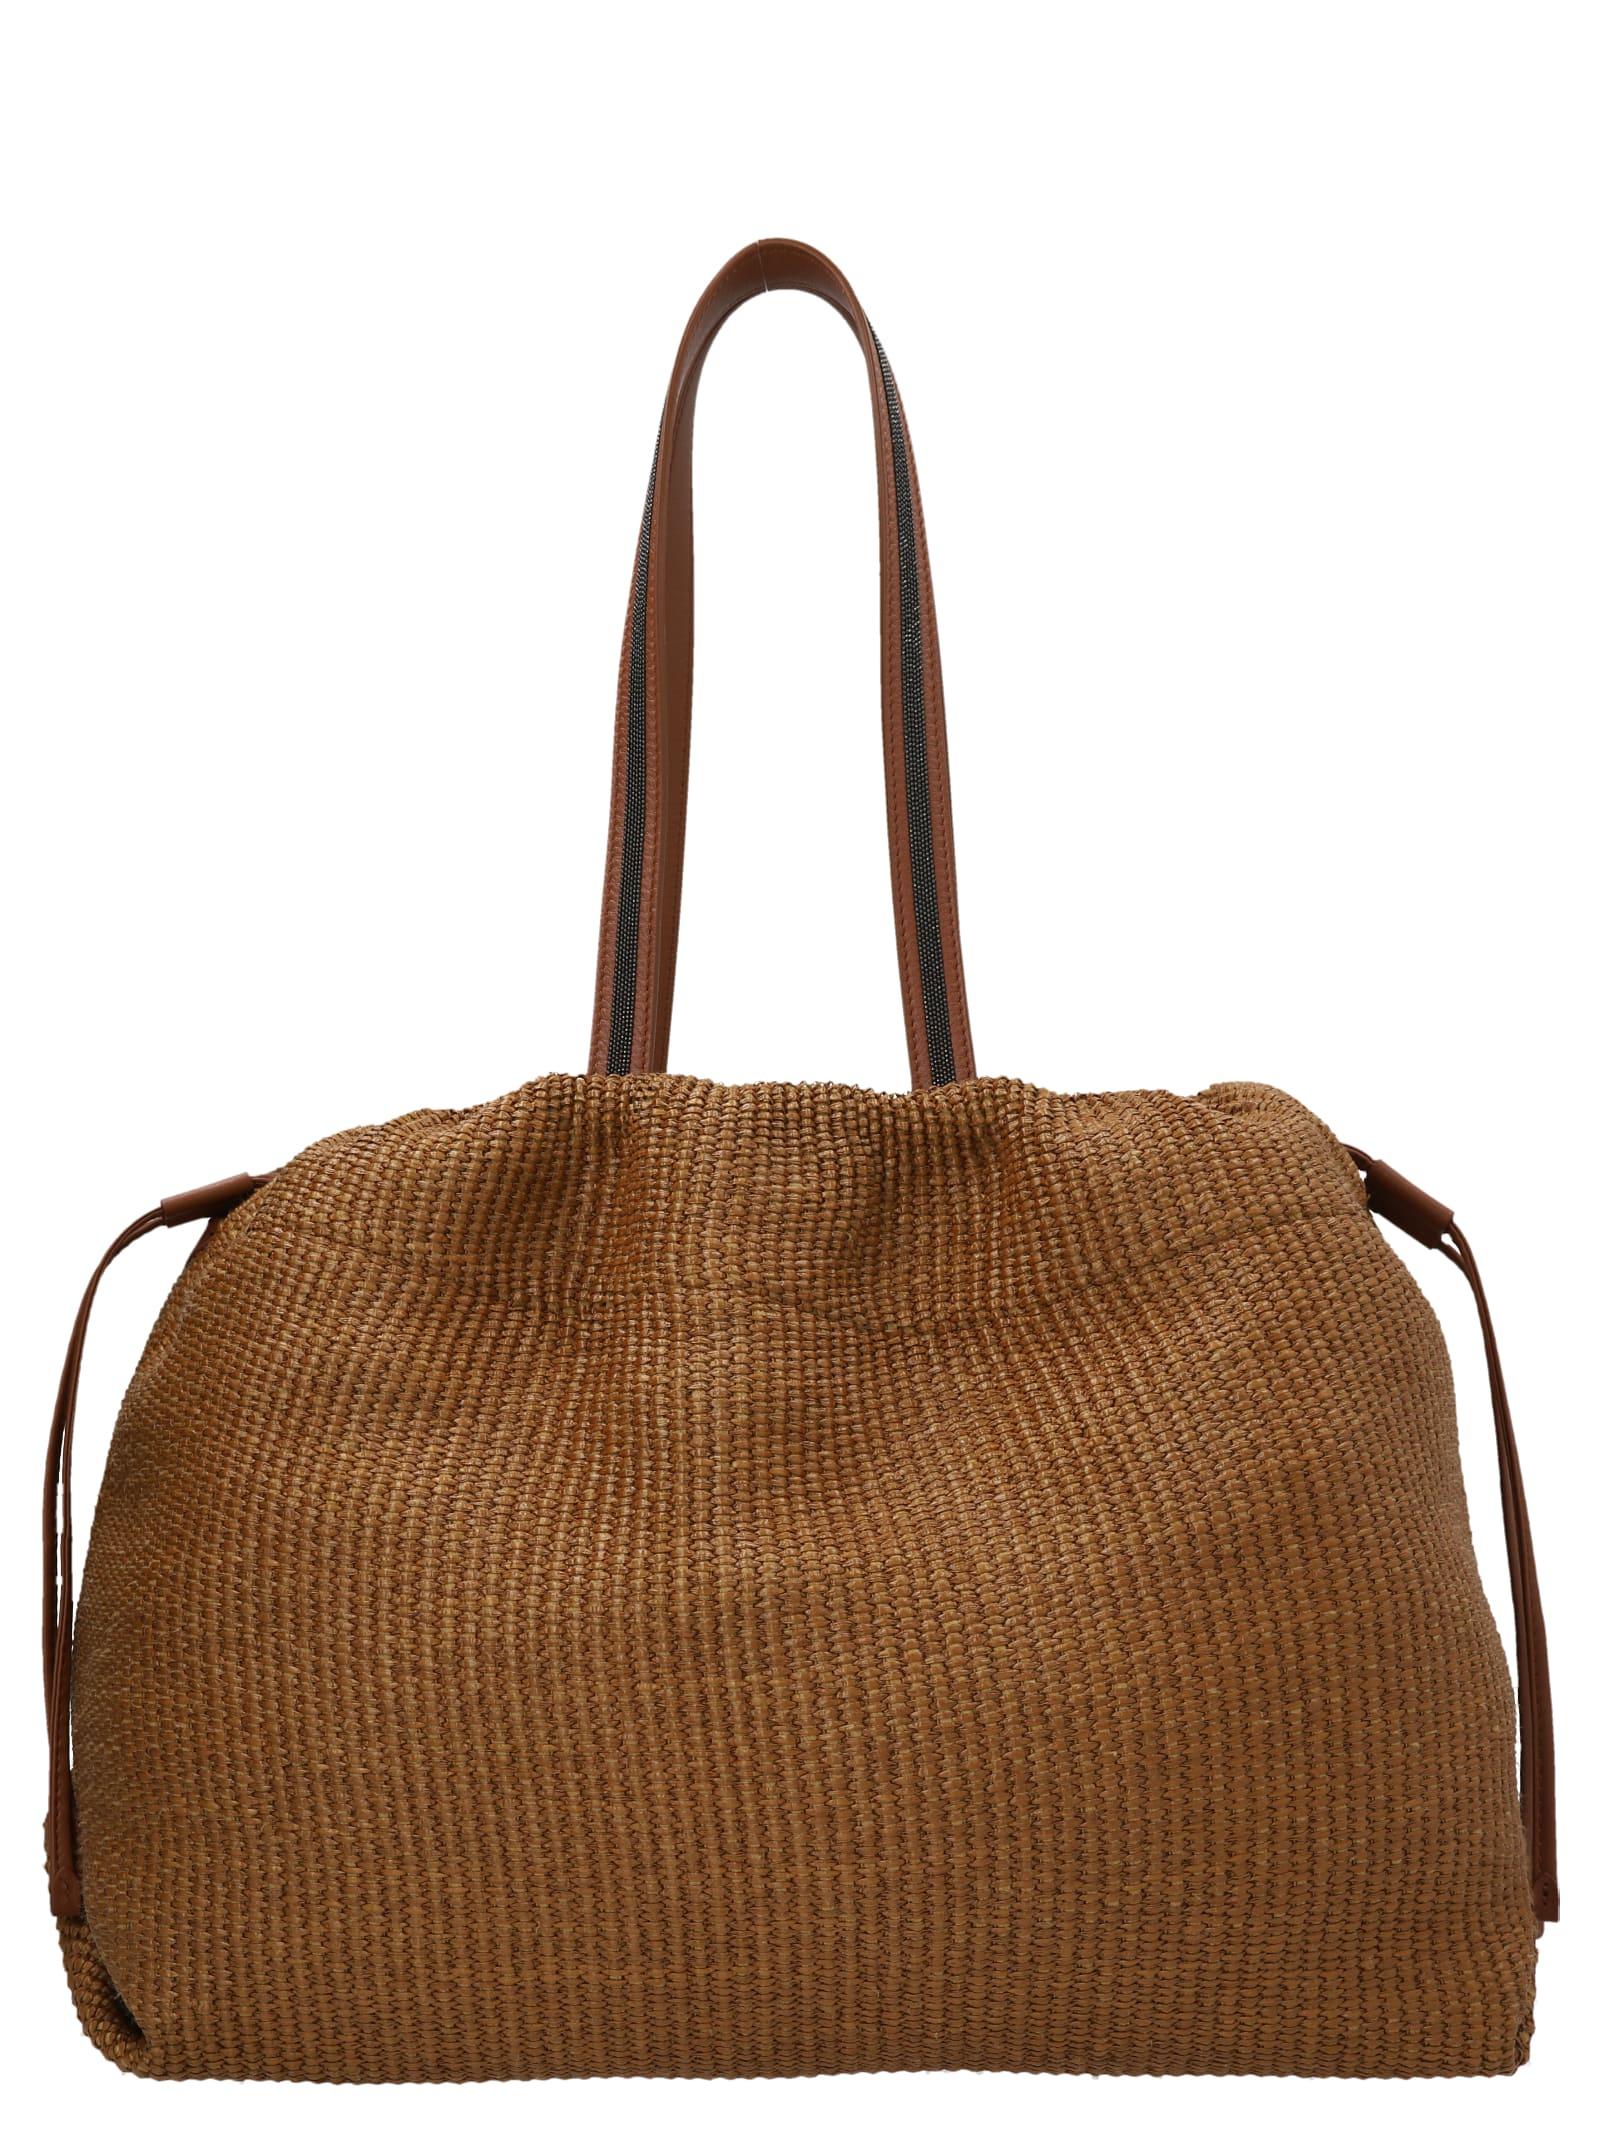 Brunello Cucinelli Raffia Shopping Bag in Brown | Lyst